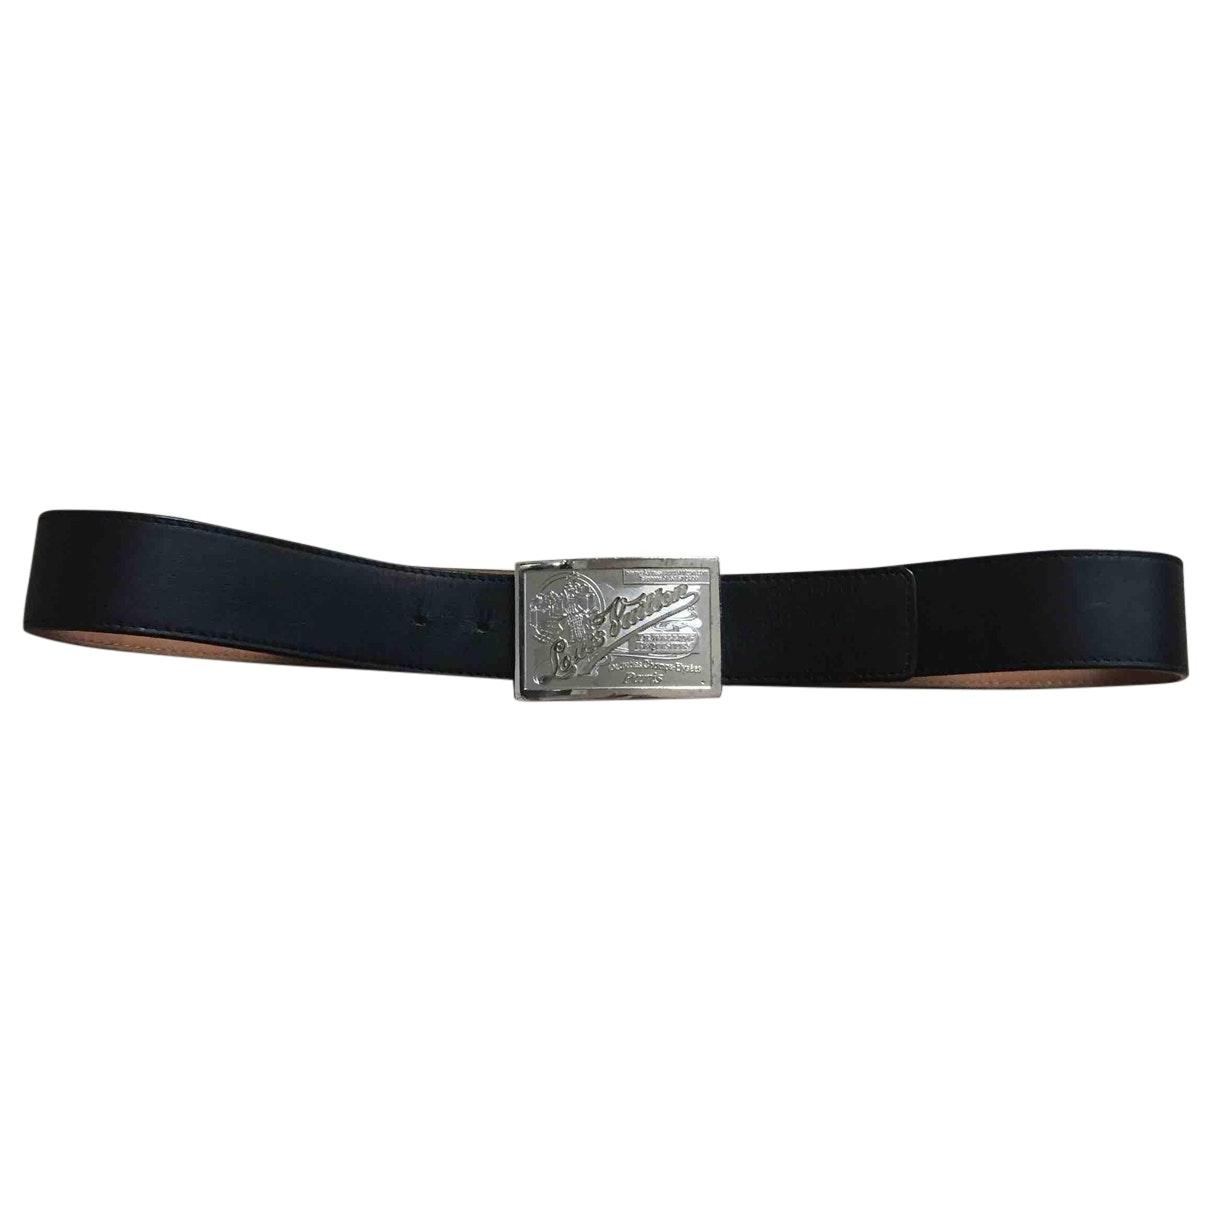 Louis Vuitton Hockenheim Leather Belt in Black for Men - Lyst